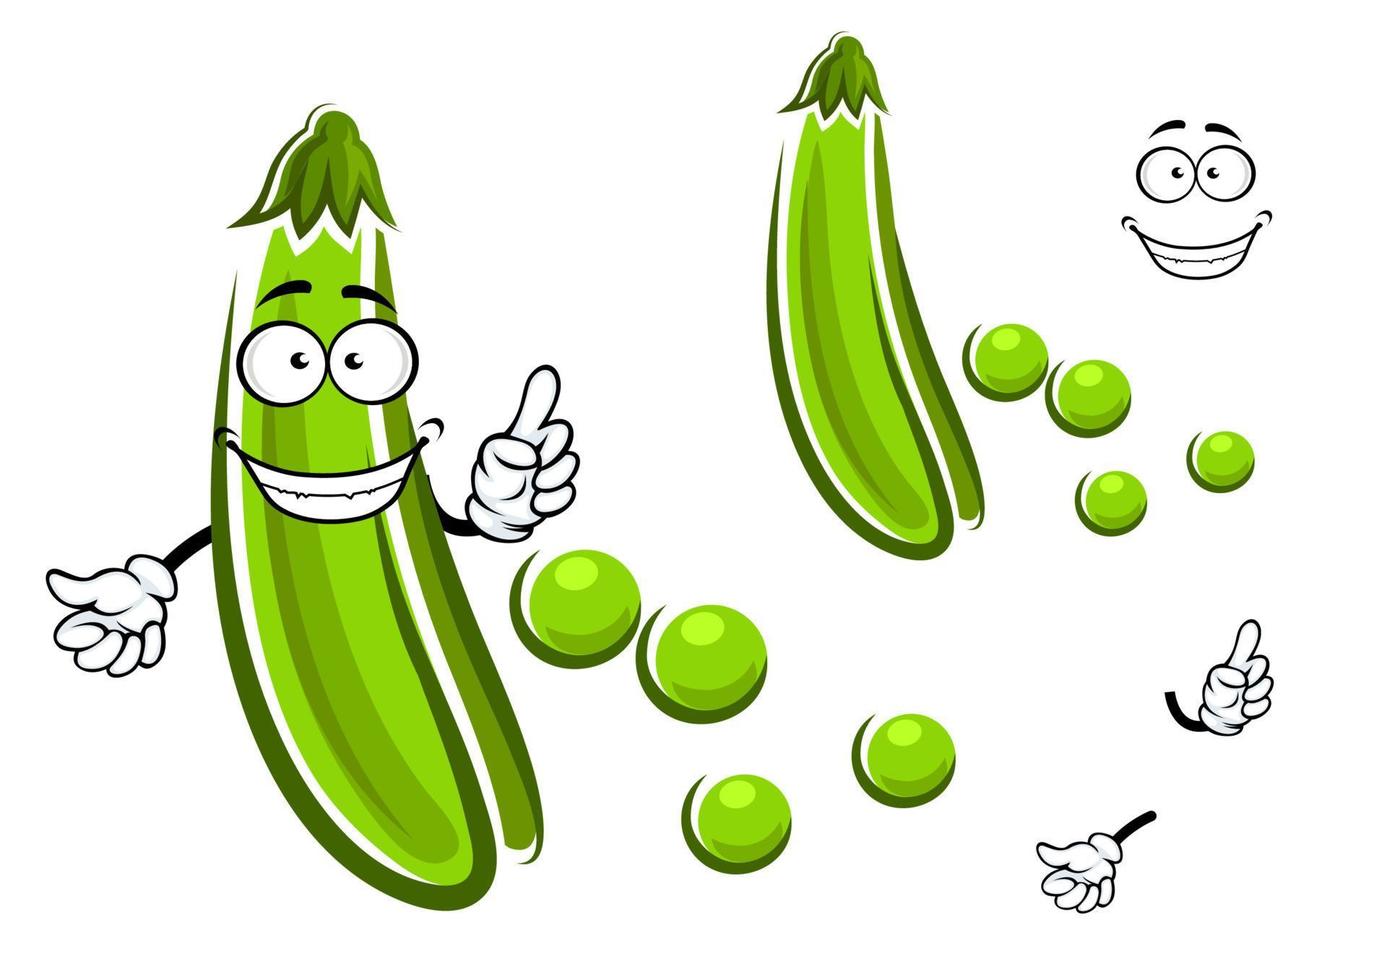 tekenfilm groen erwt peul groente vector